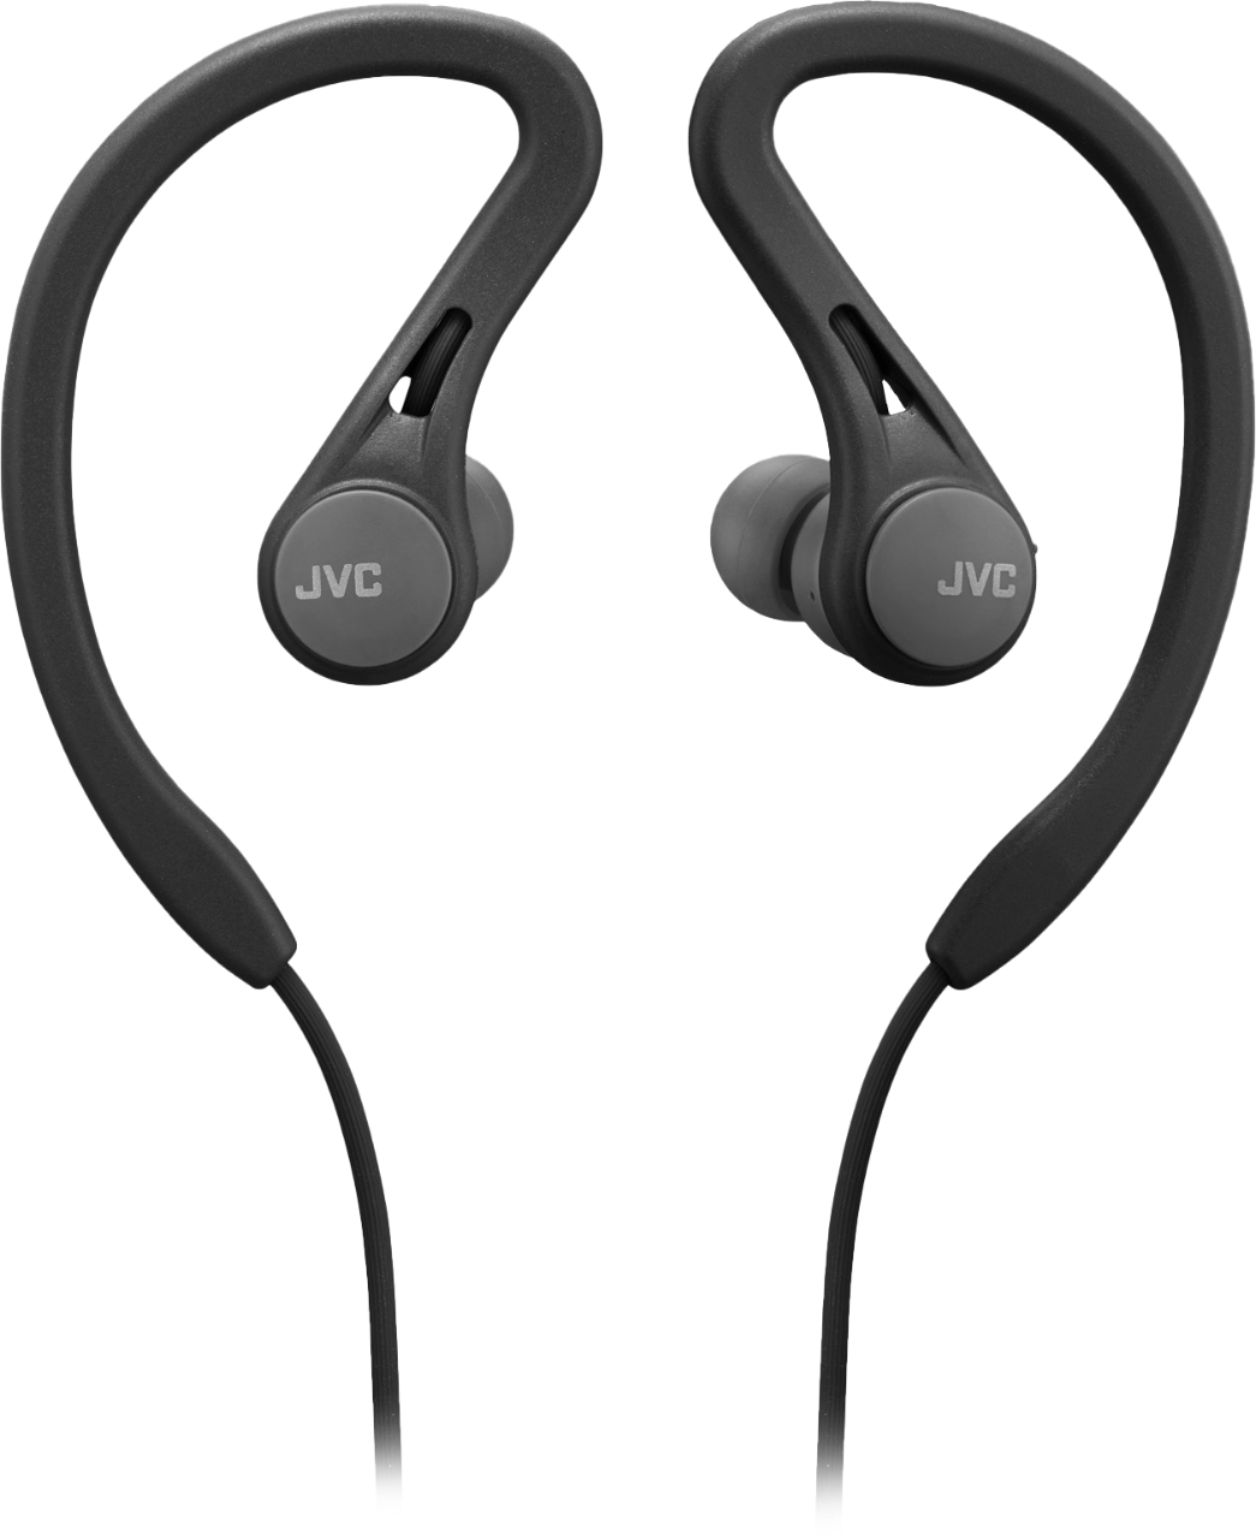 JVC HA-EC25WB – Auriculares inalámbricos deportivos con Bluetooth